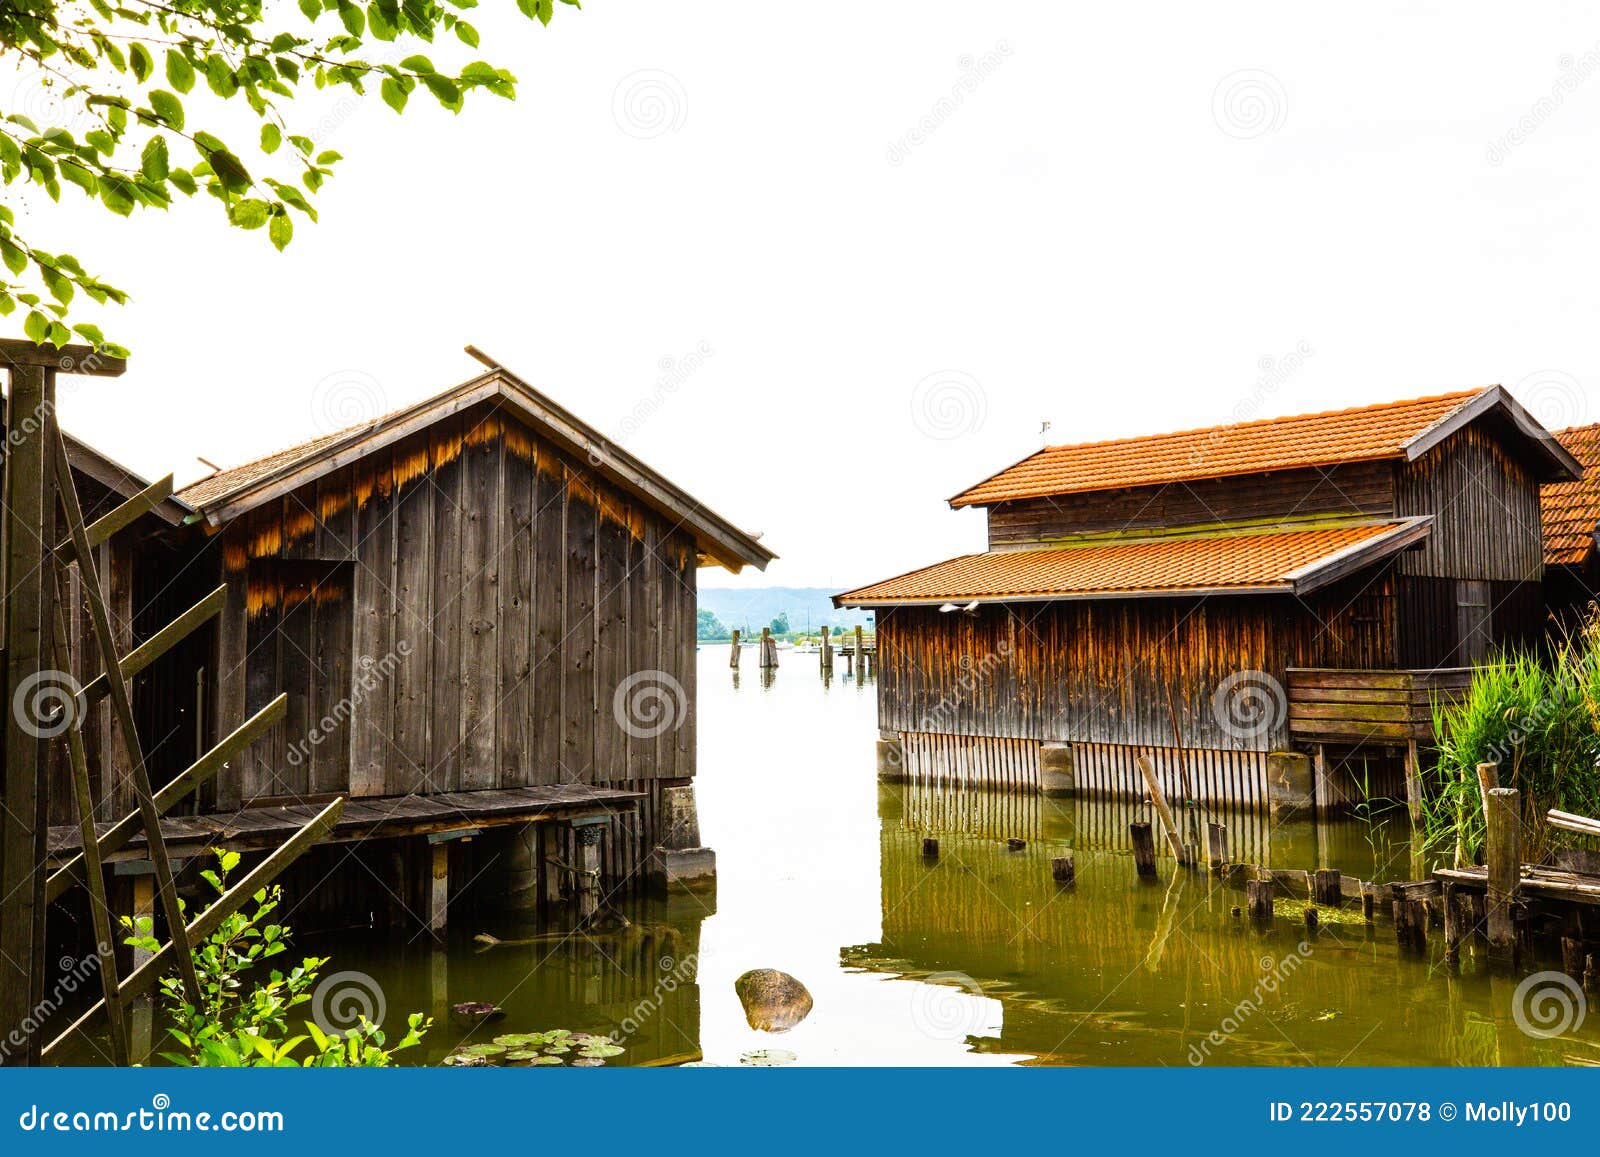 ammerlake with boats house, idylic